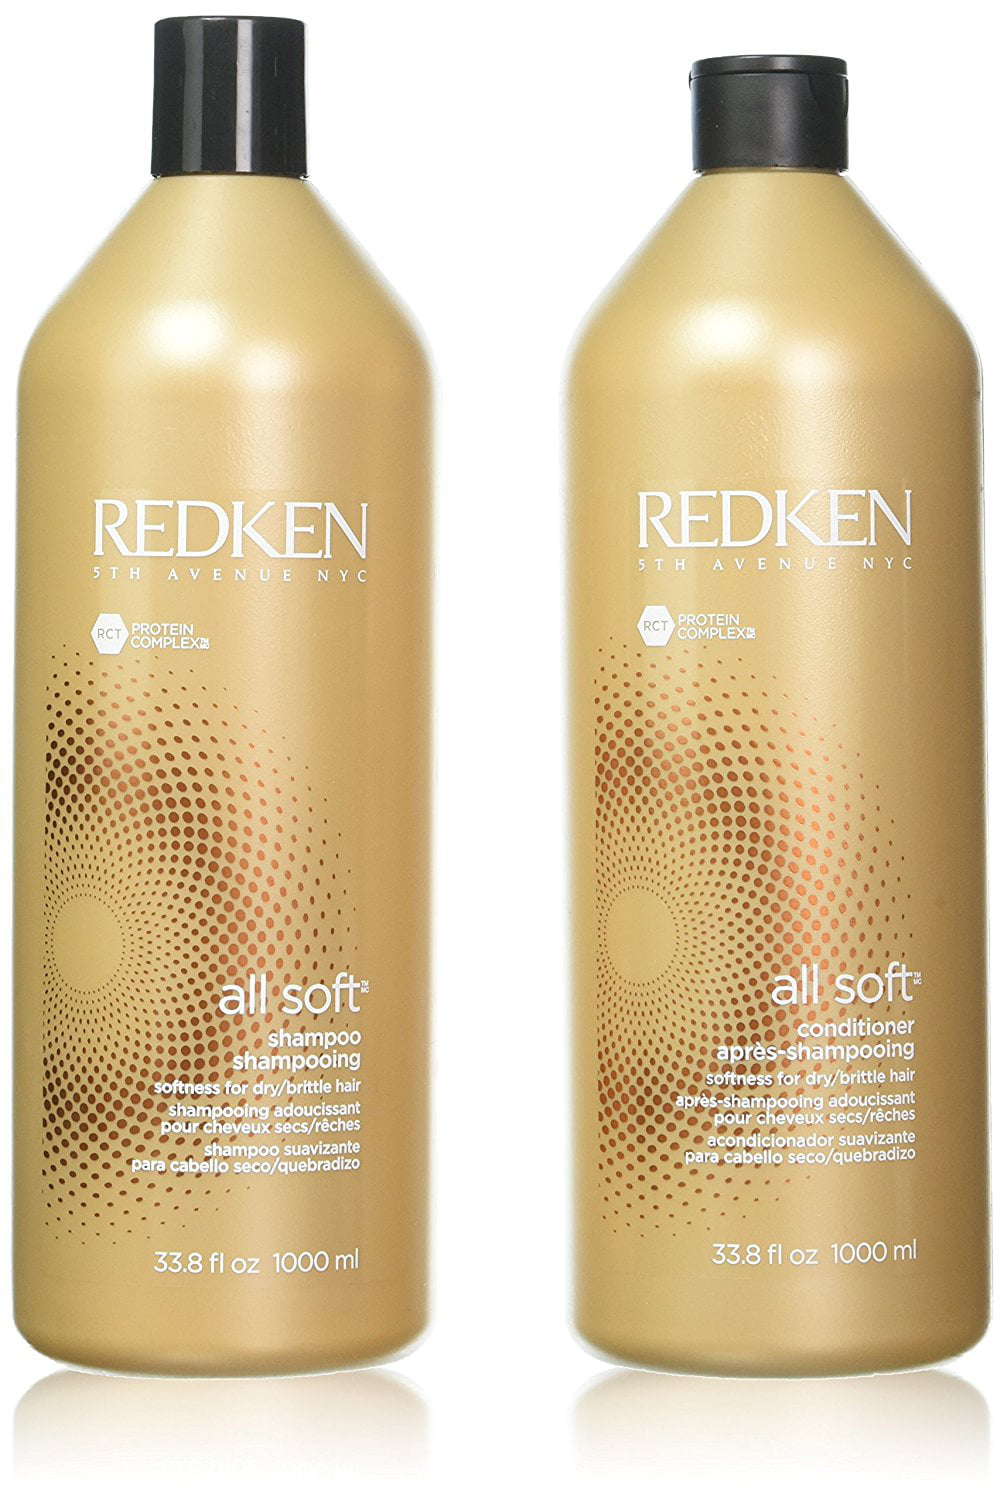 Redken Redken All Soft Shampoo and Conditioner Set 33.8oz Walmart